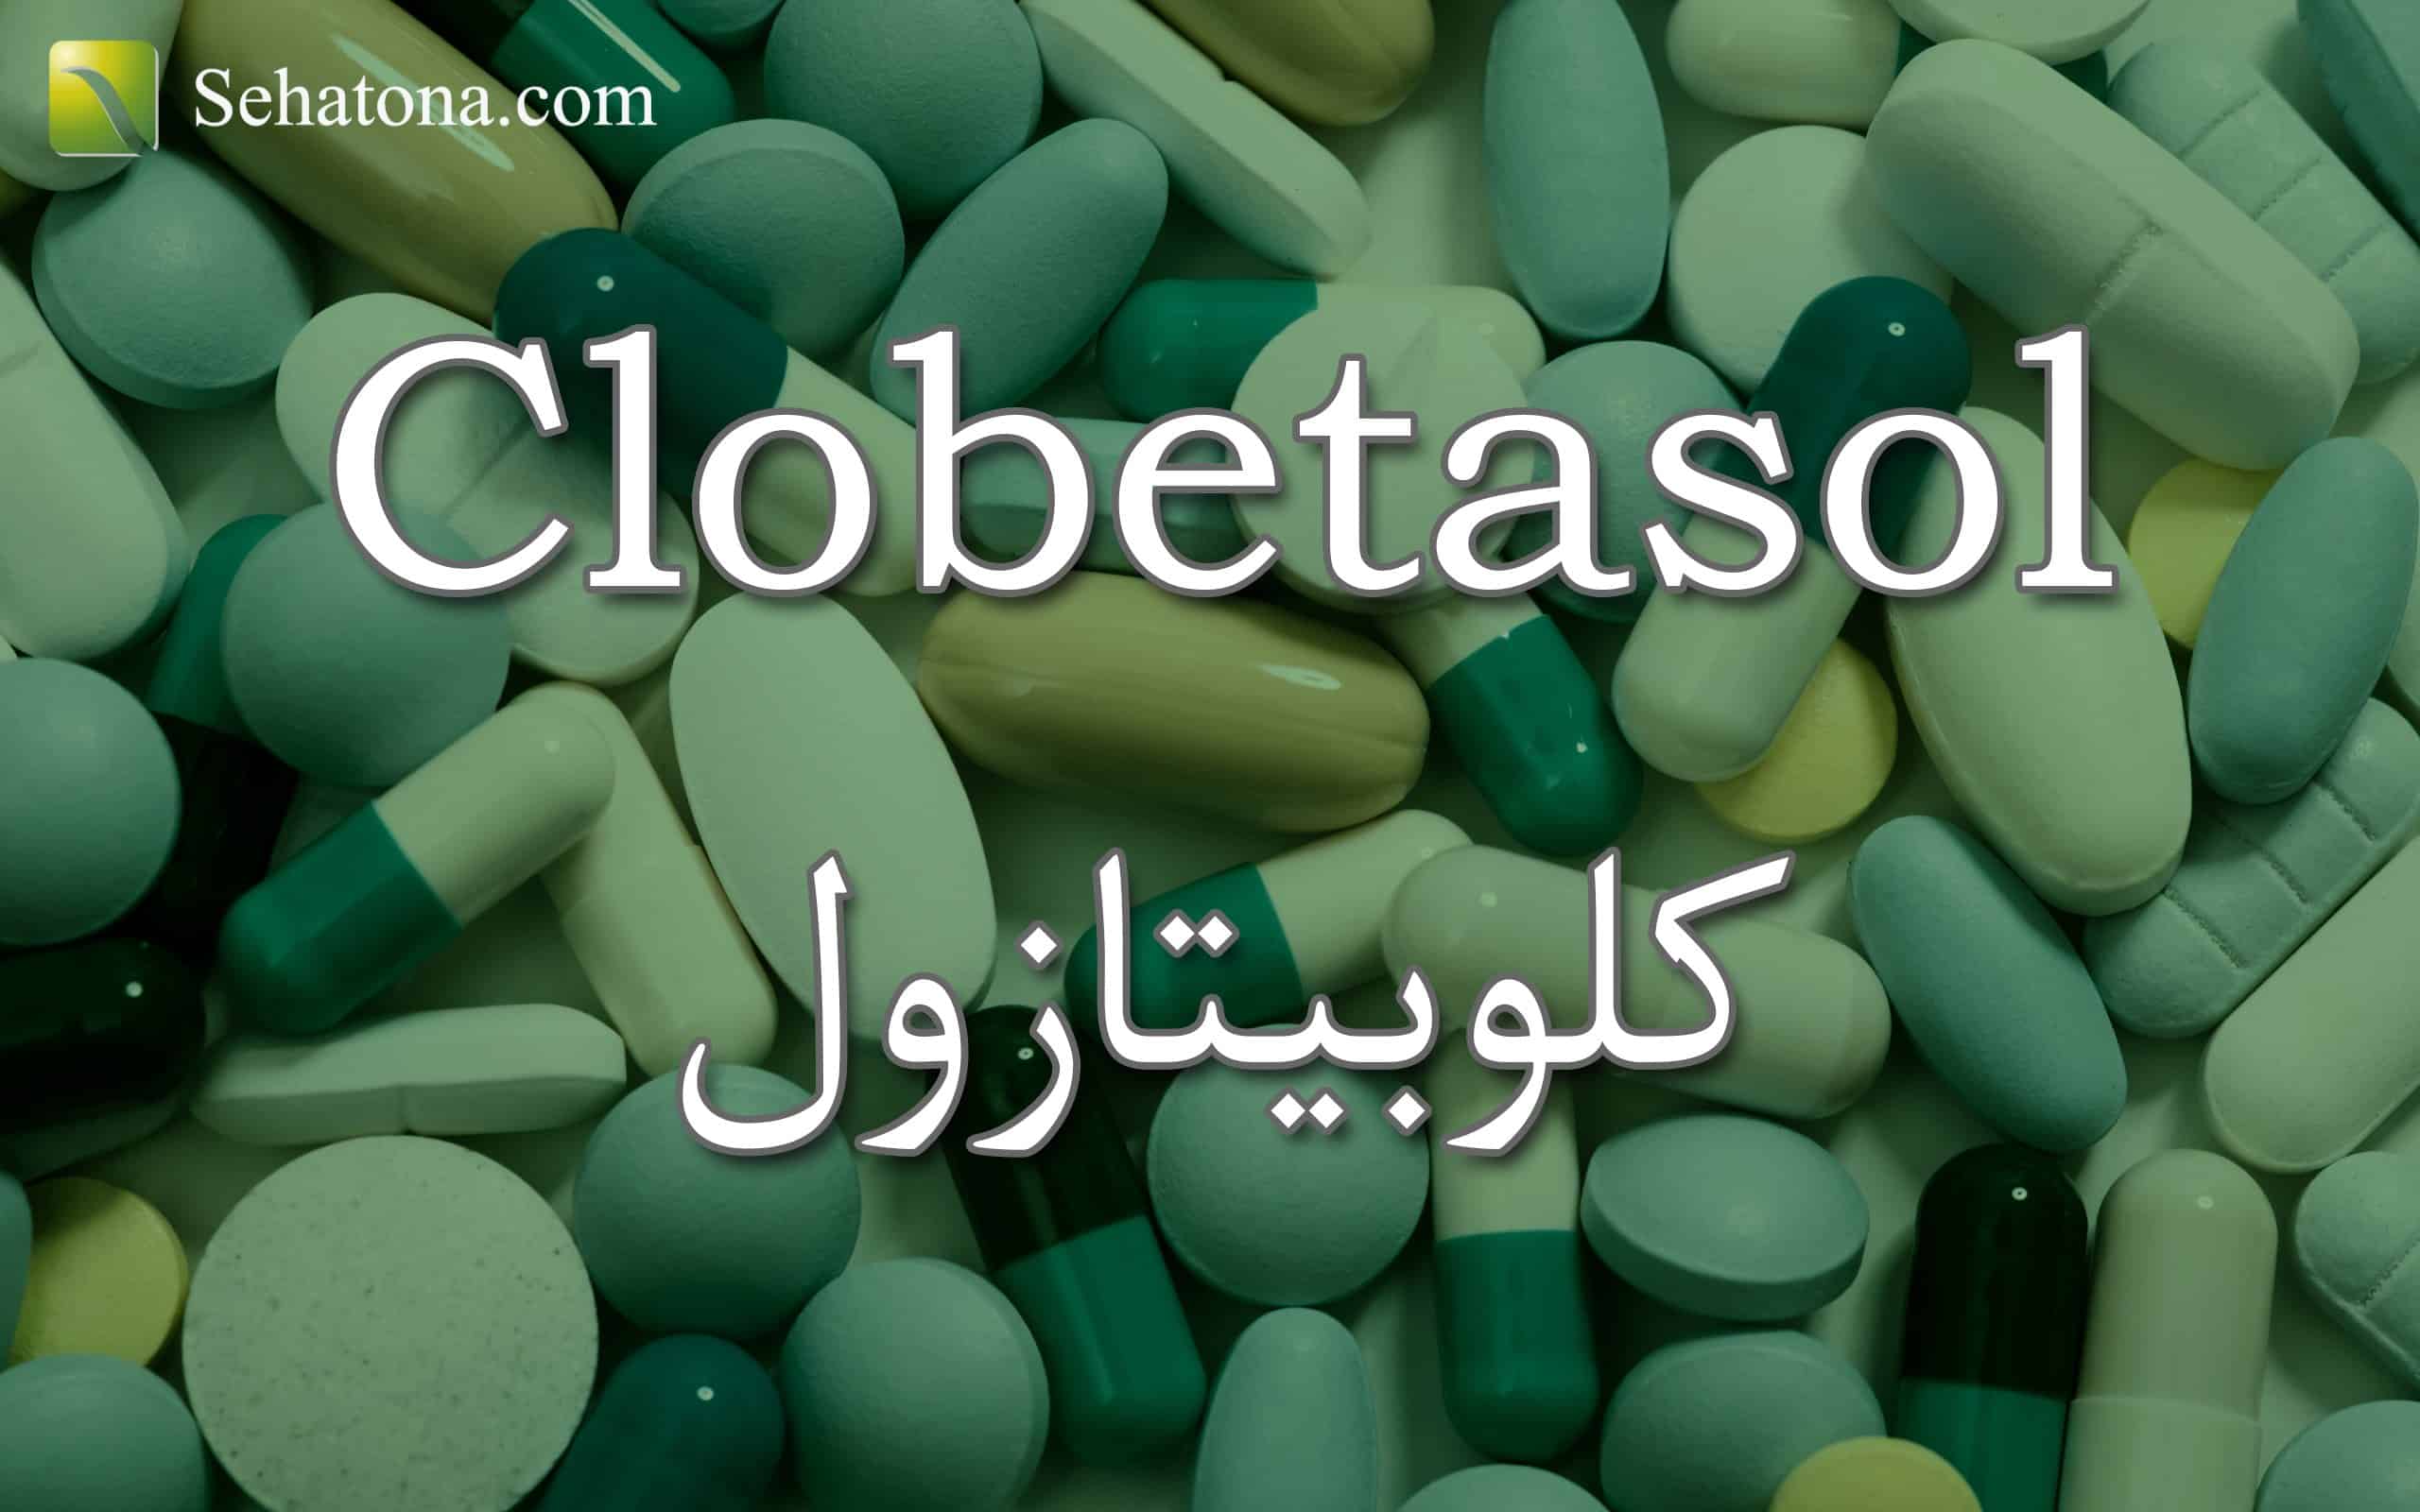 Clobetasol